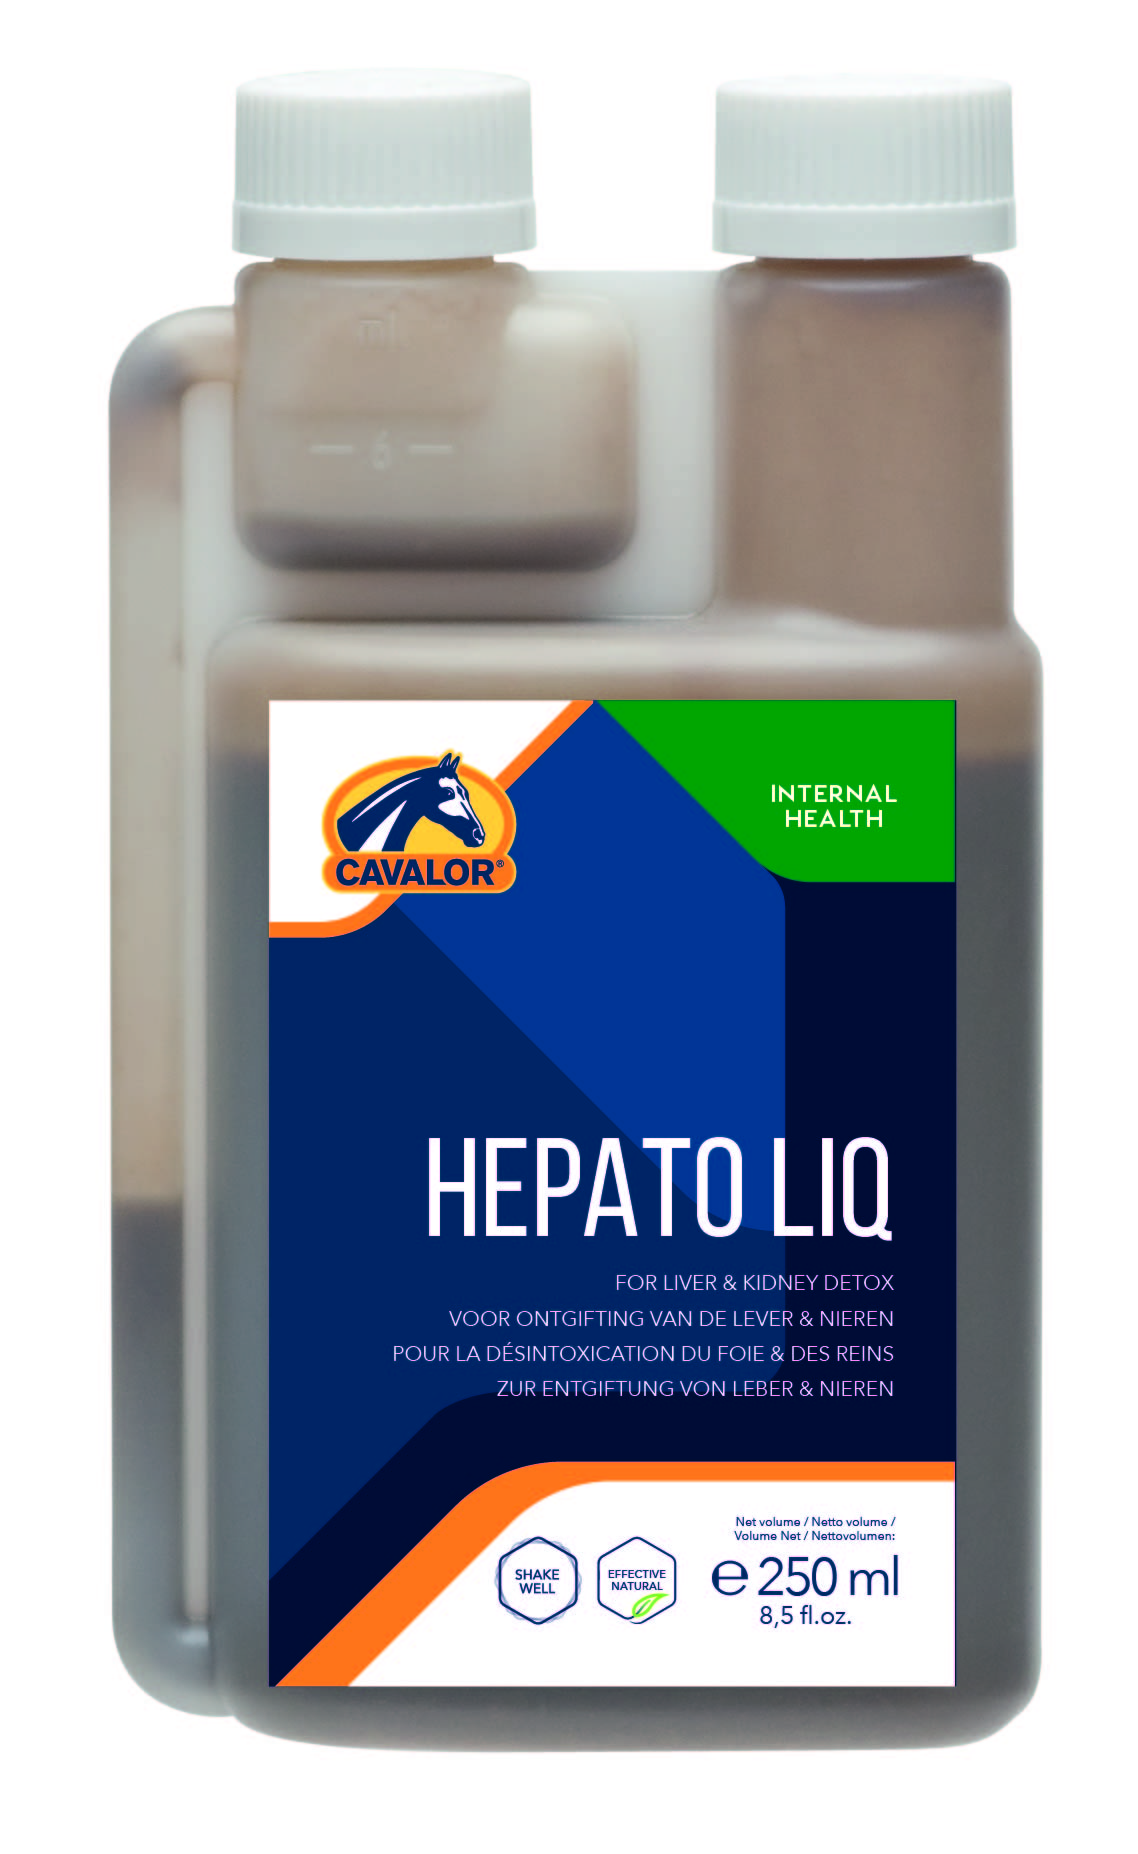 CAVALOR Hepato Liquid, 250ml